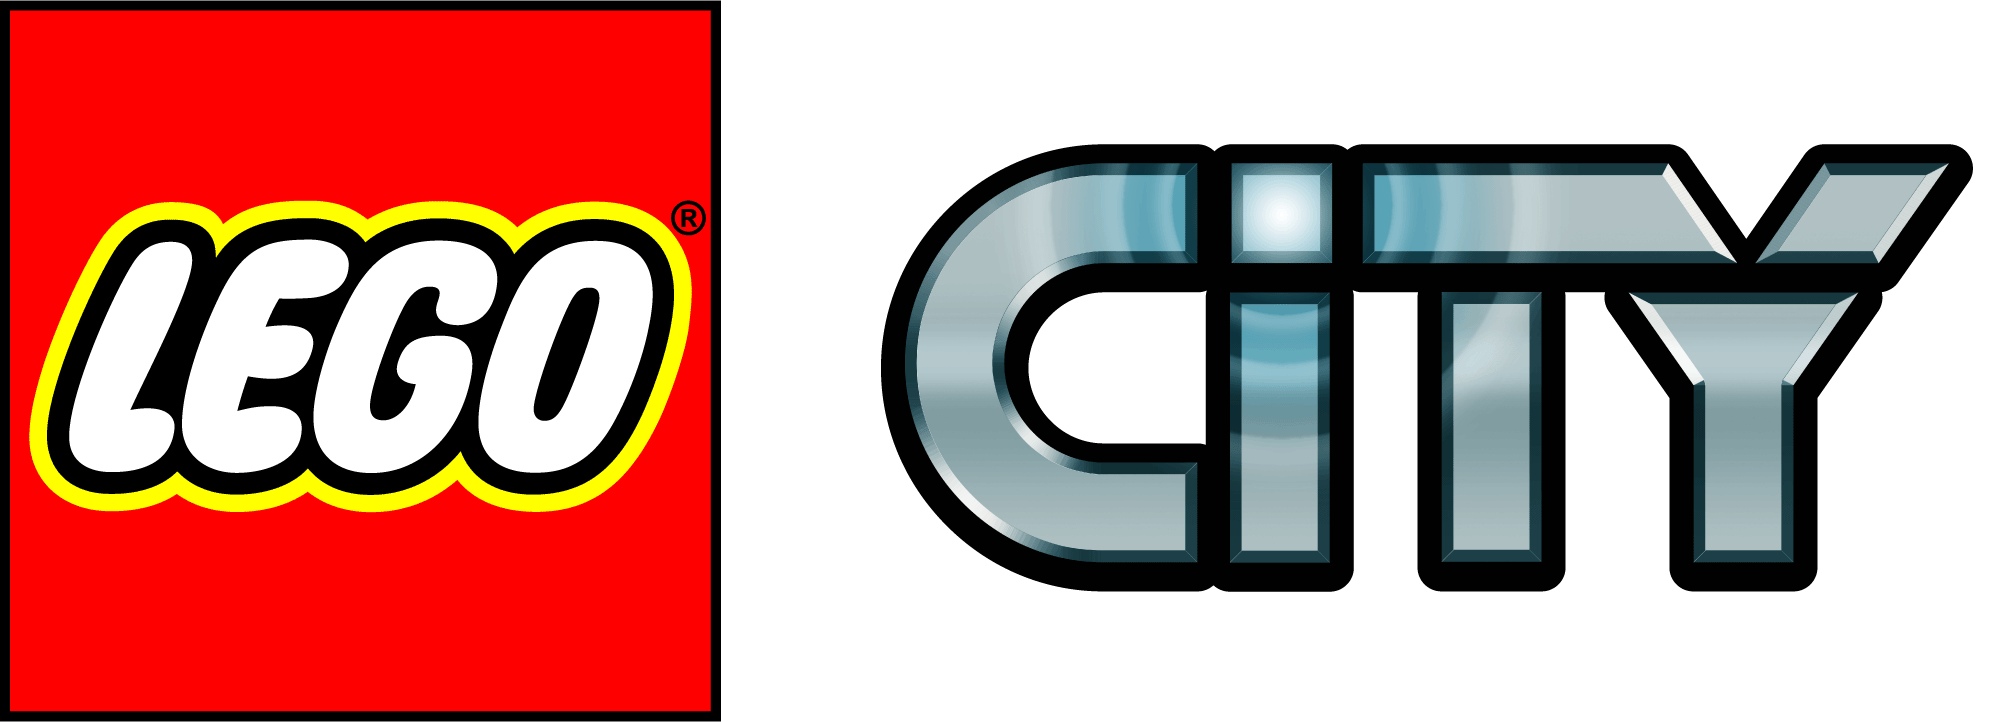 Marvel Logo Clipart   Cliparthut   Free Clipart